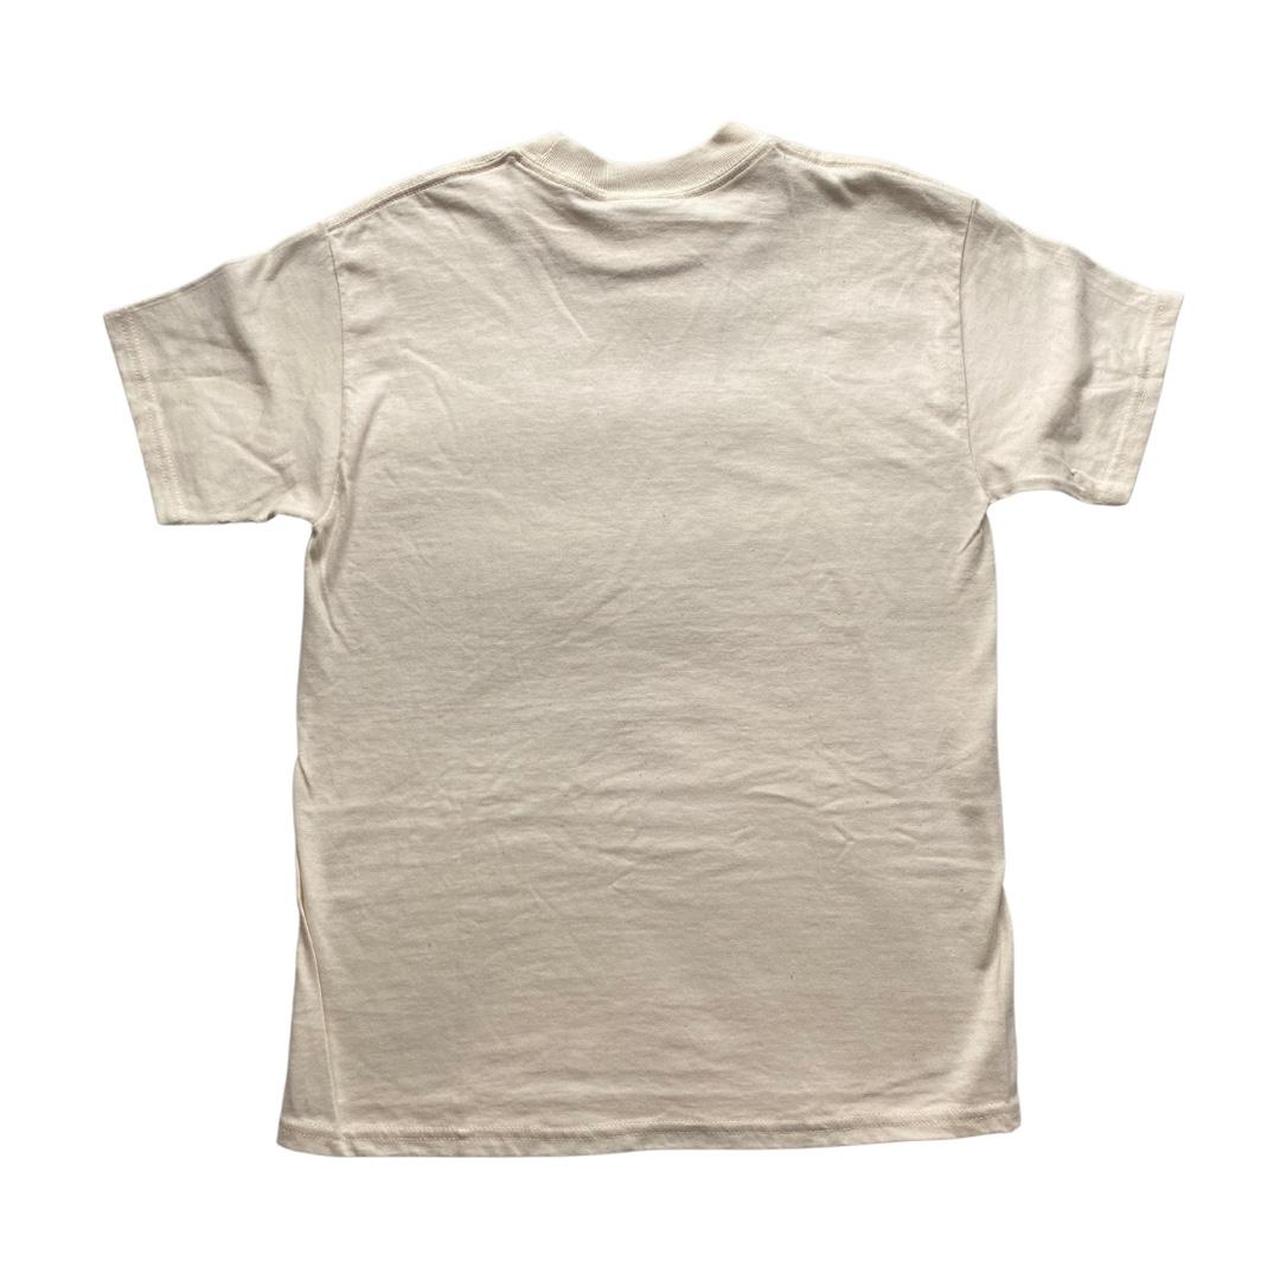 Anna Sui Women's Cream T-shirt (2)